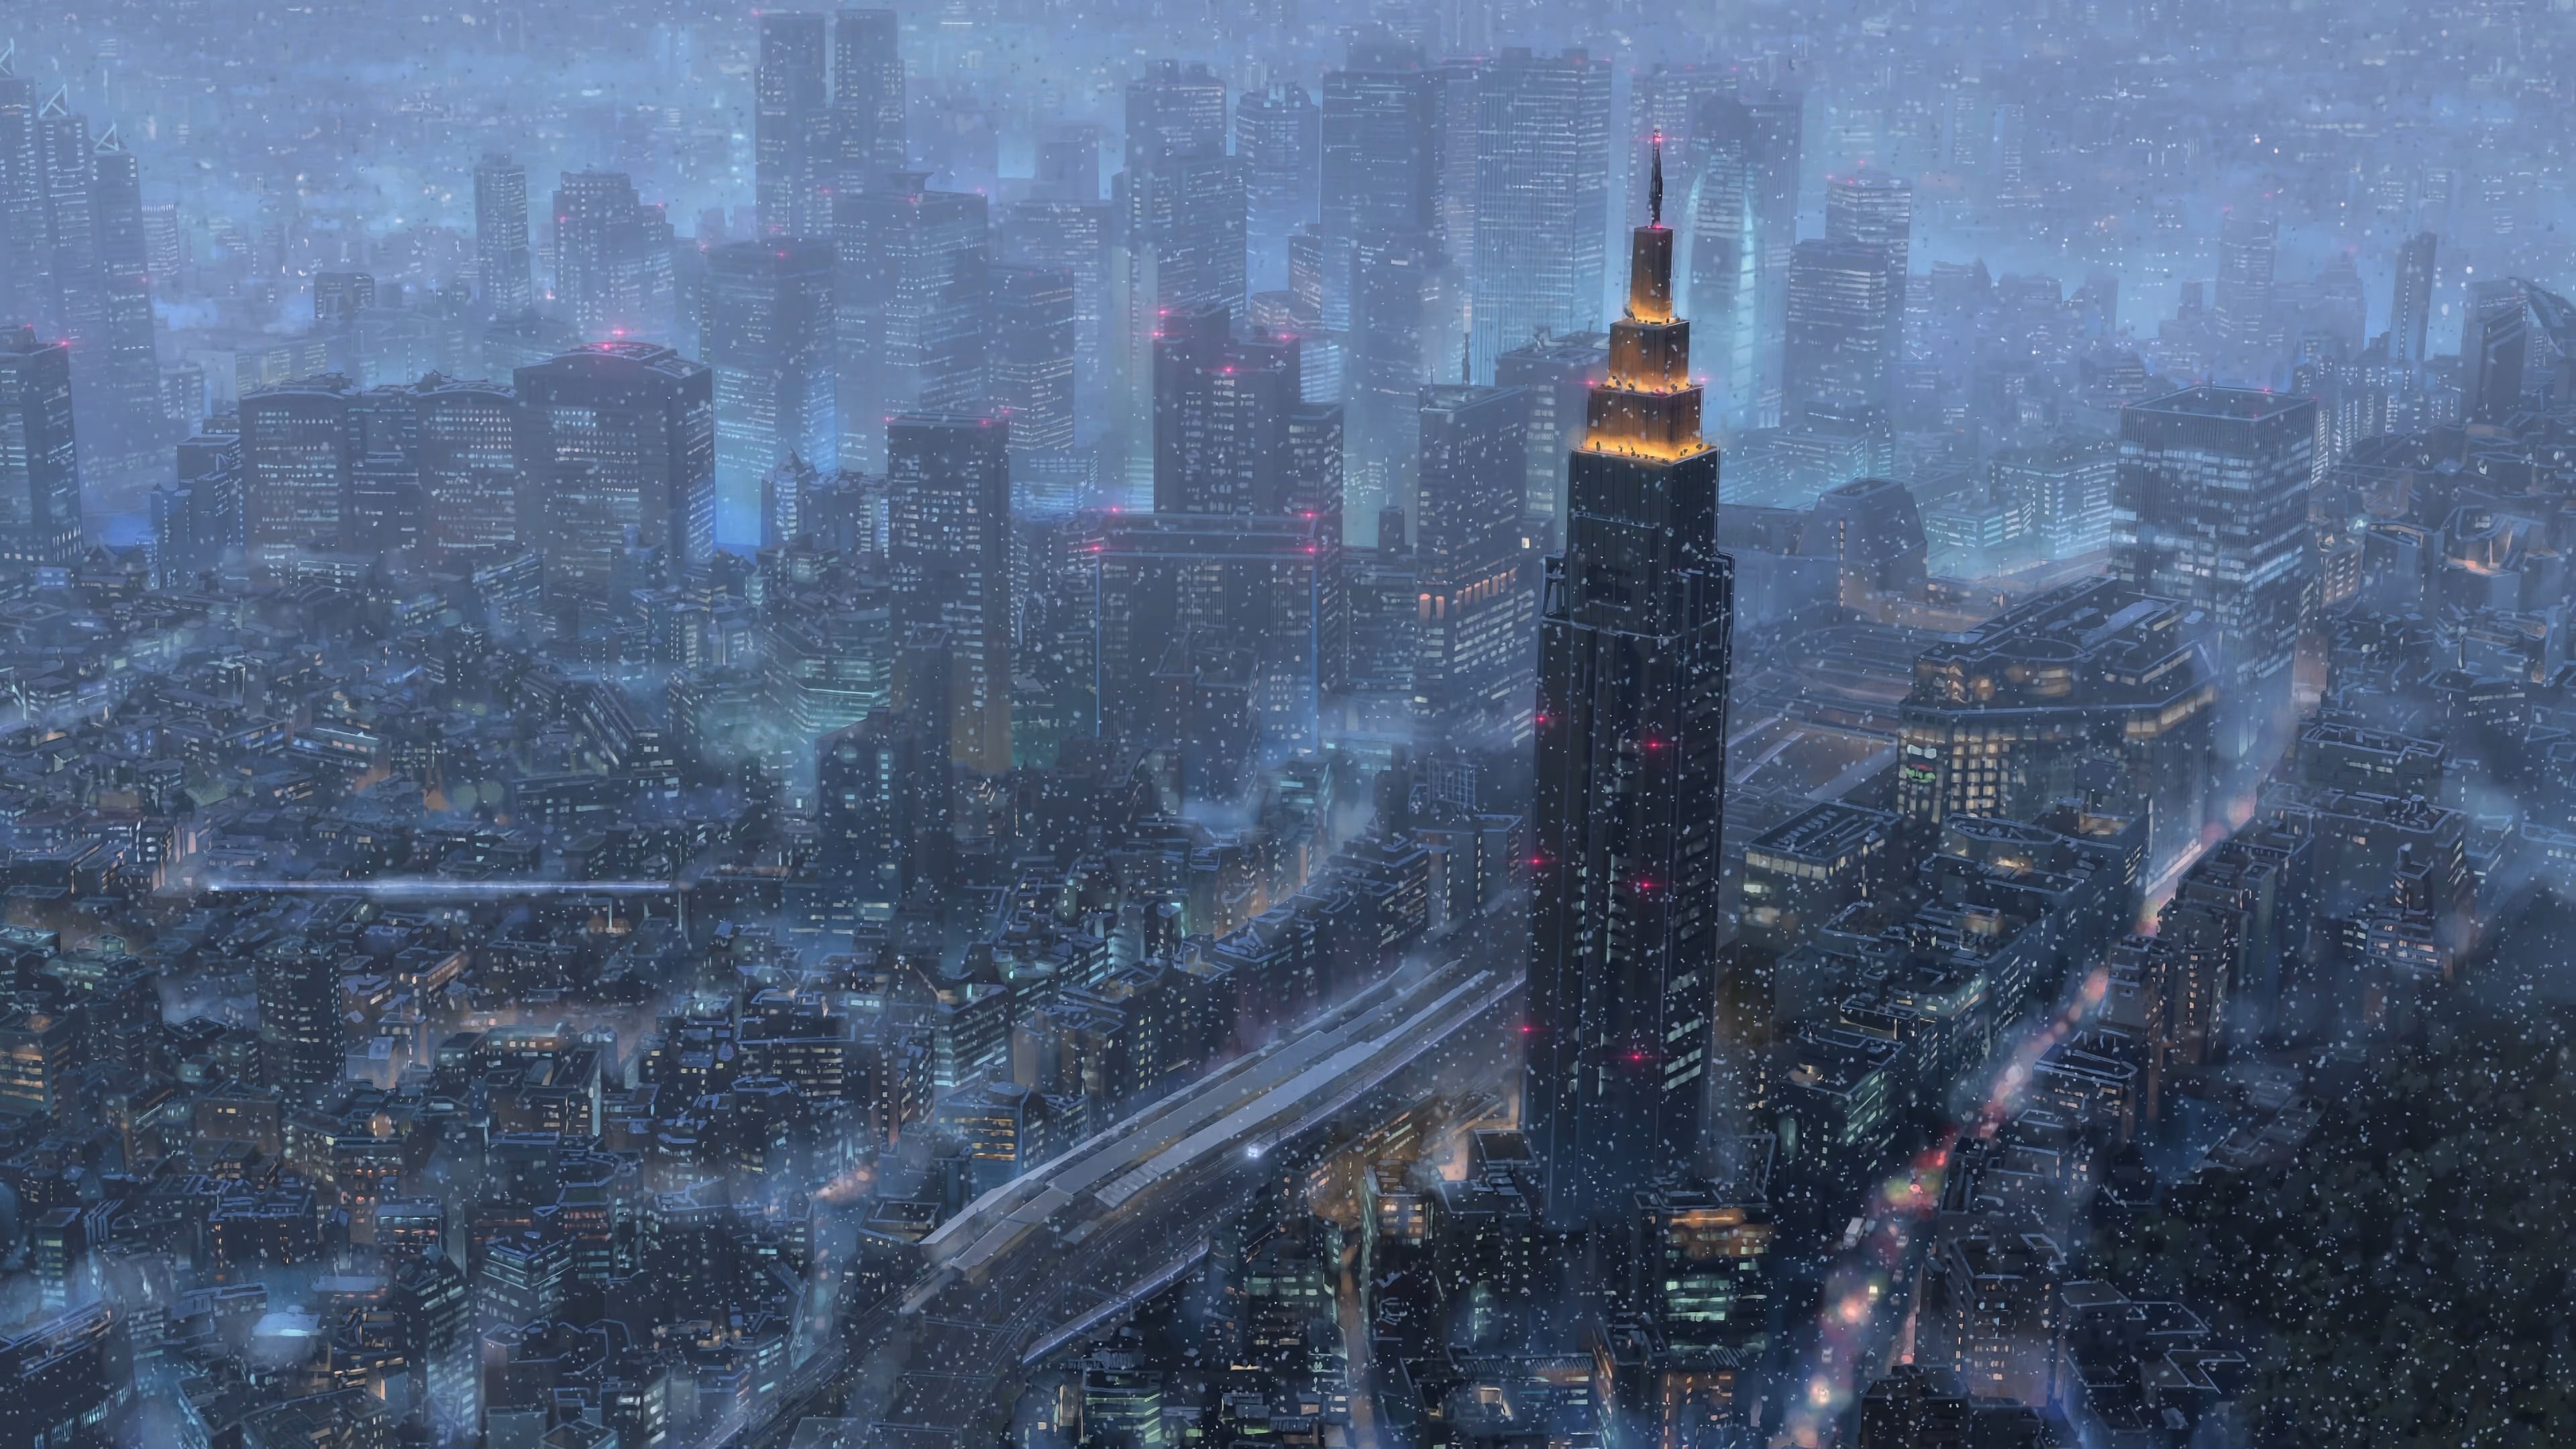 cityscape wallpaper, illustration of city during night time, Makoto Shinkai